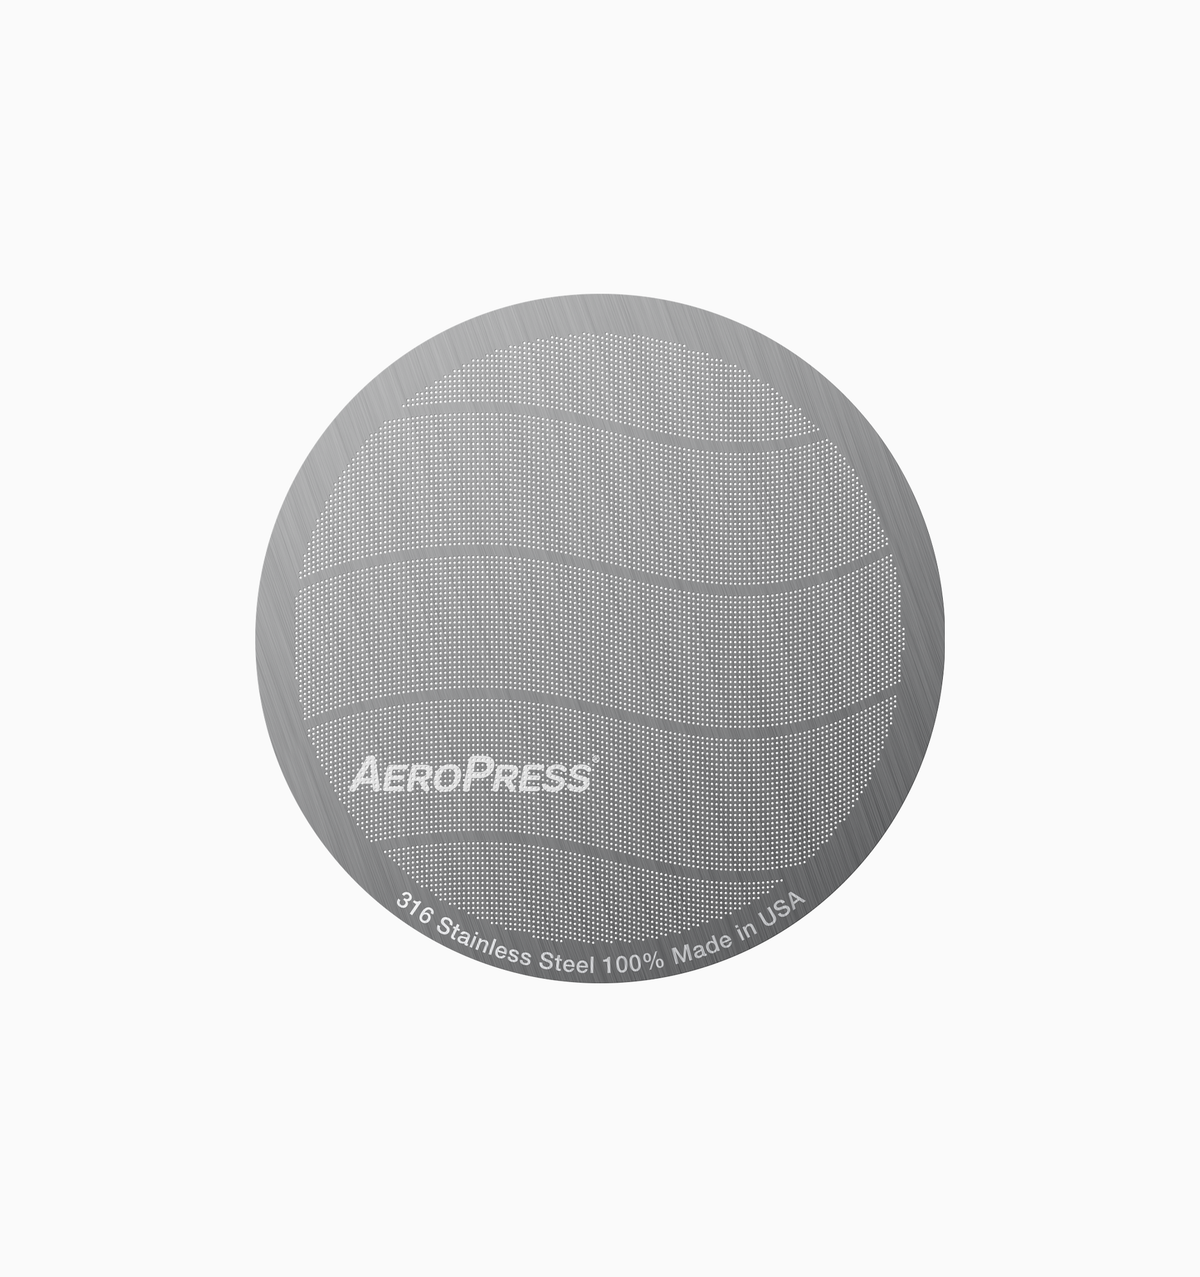 AeroPress Stainless Steel Reusable Filter - Silver